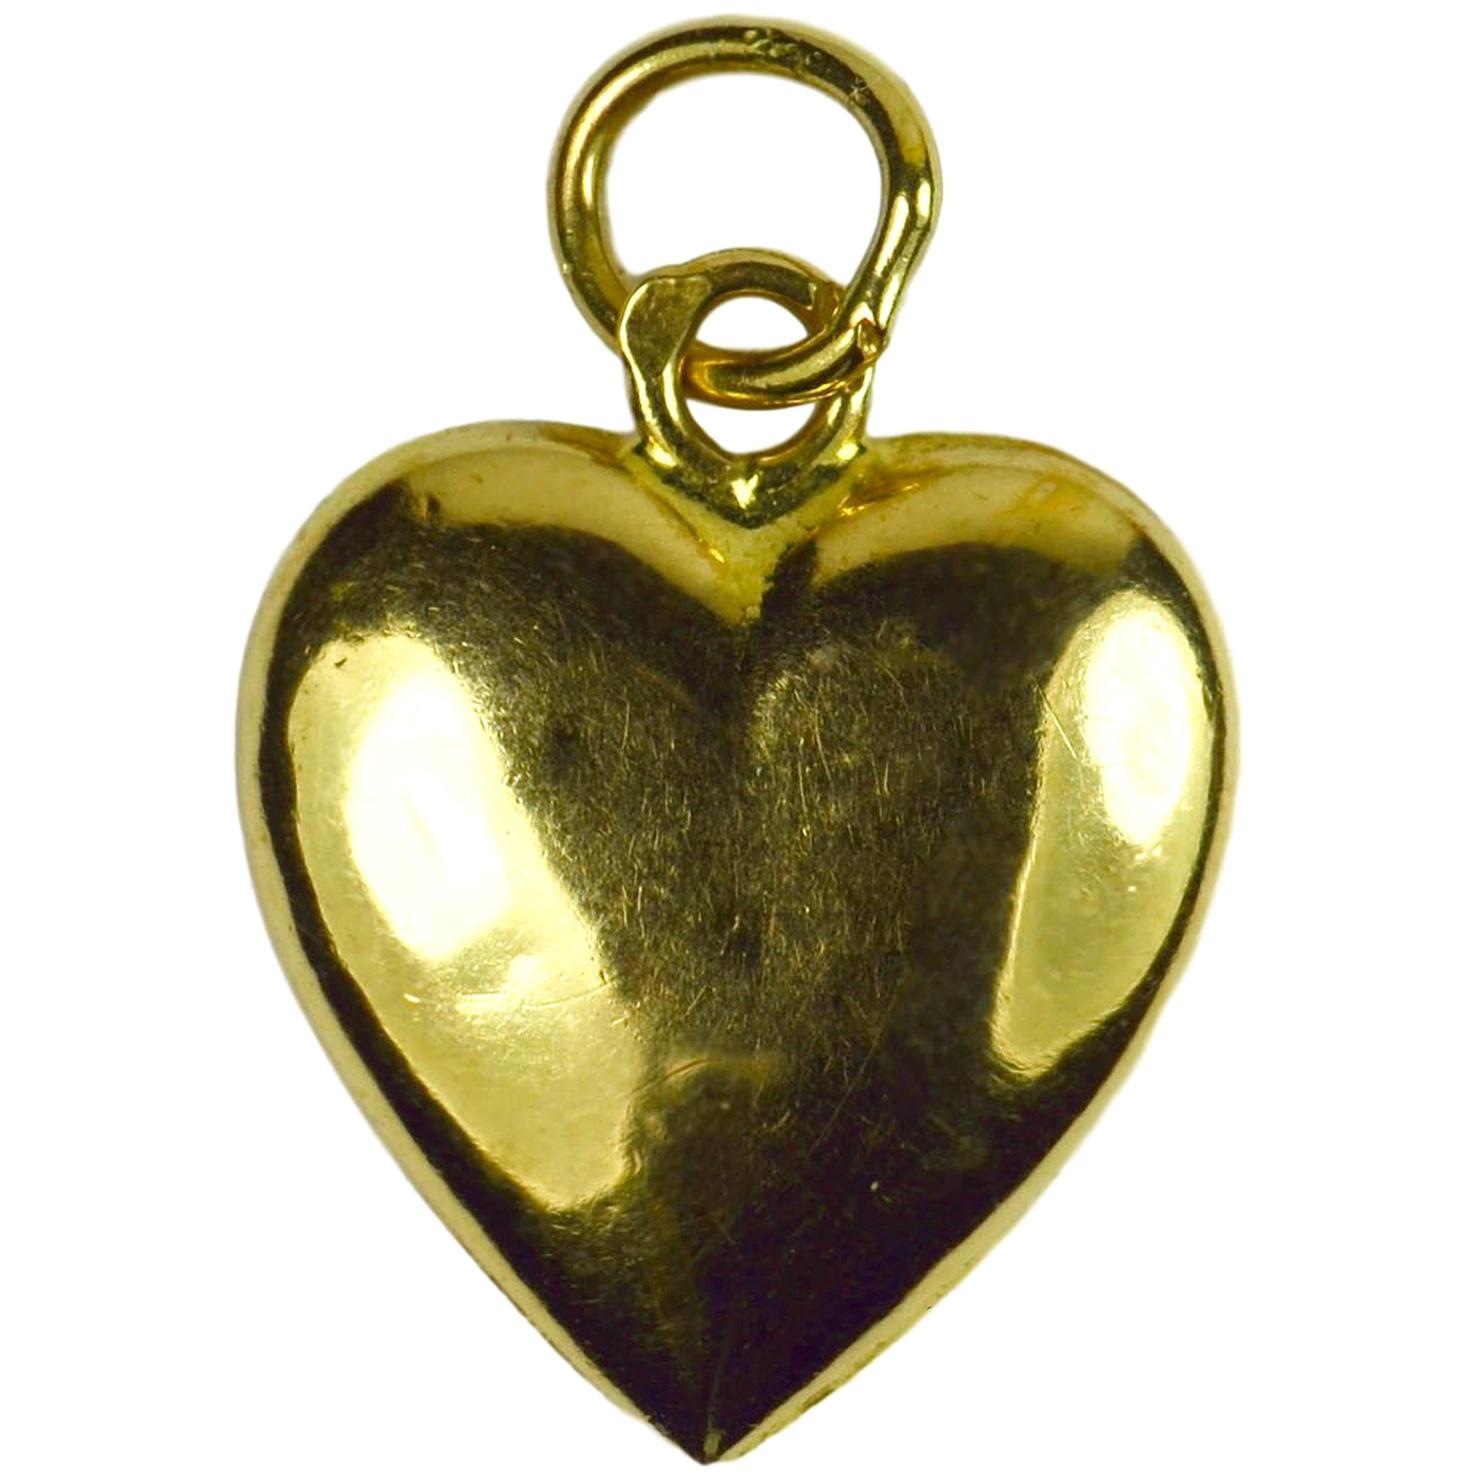 French 18 Karat Yellow Gold Puffy Heart Charm Pendant